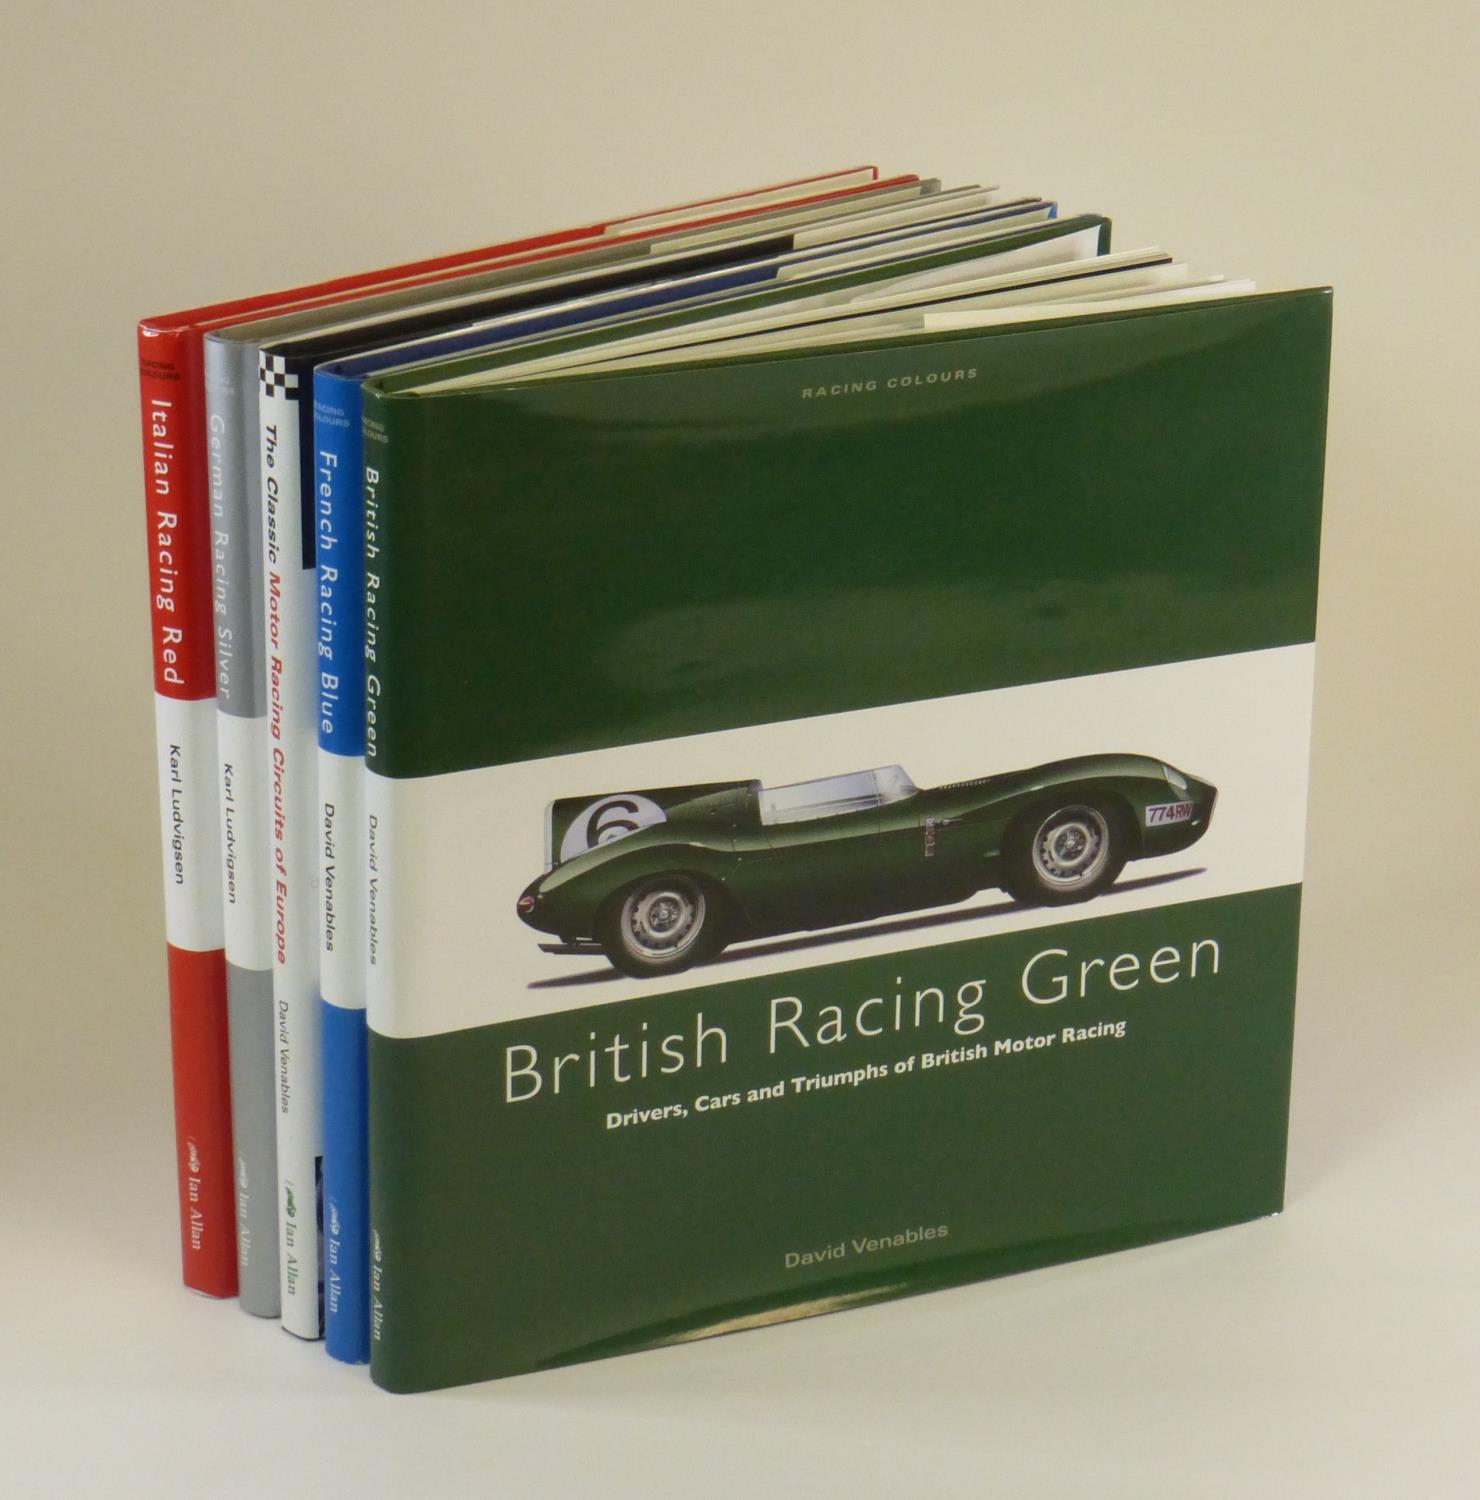 European Motor Racing. Five quarto square format hardback volumes, all virtually as new in their